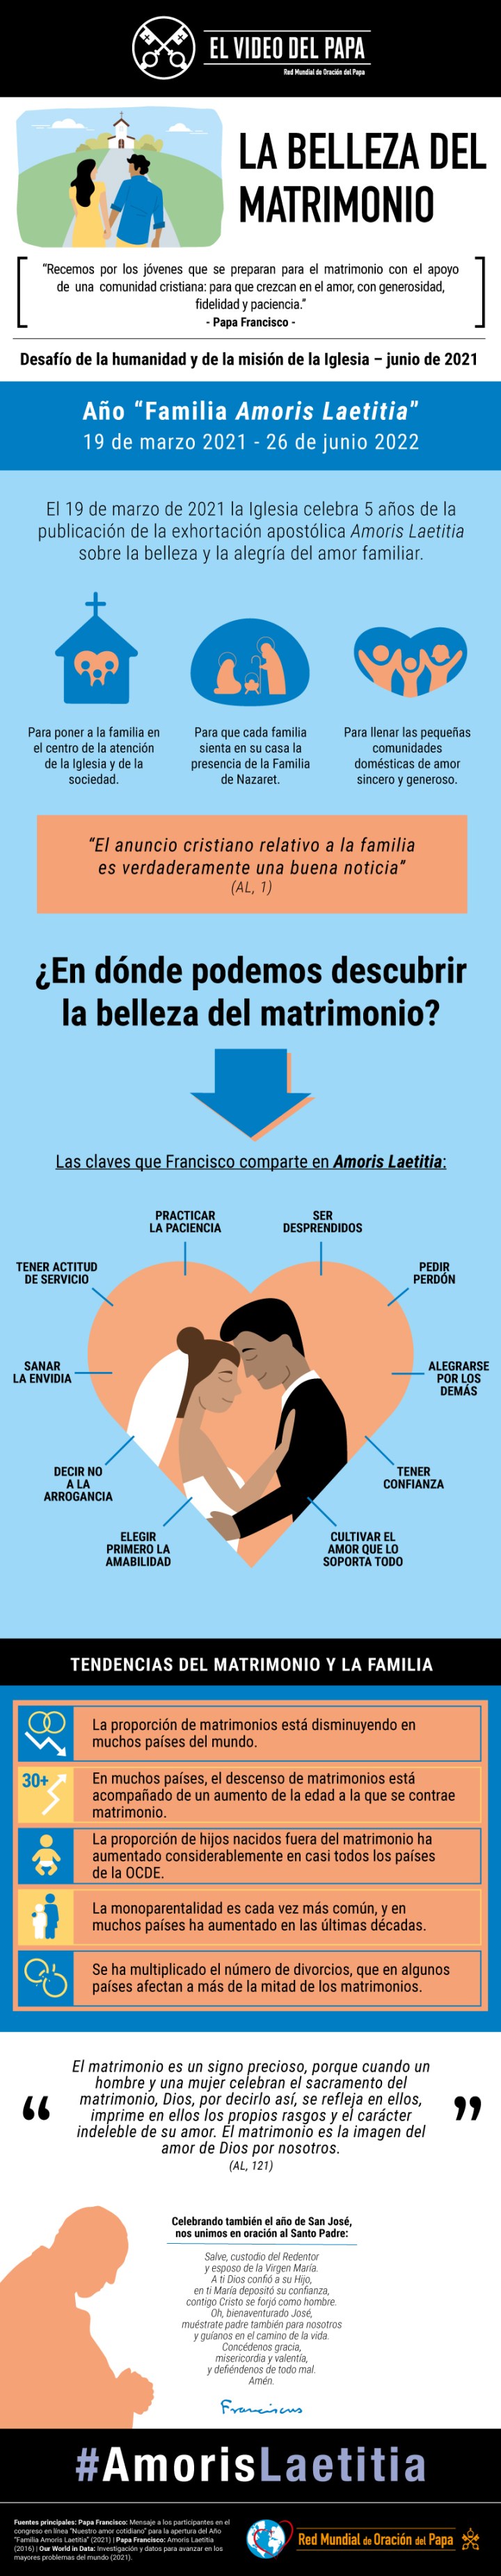 Infografía-TPV-6-2021-ES-La-belleza-del-matrimonio.jpg